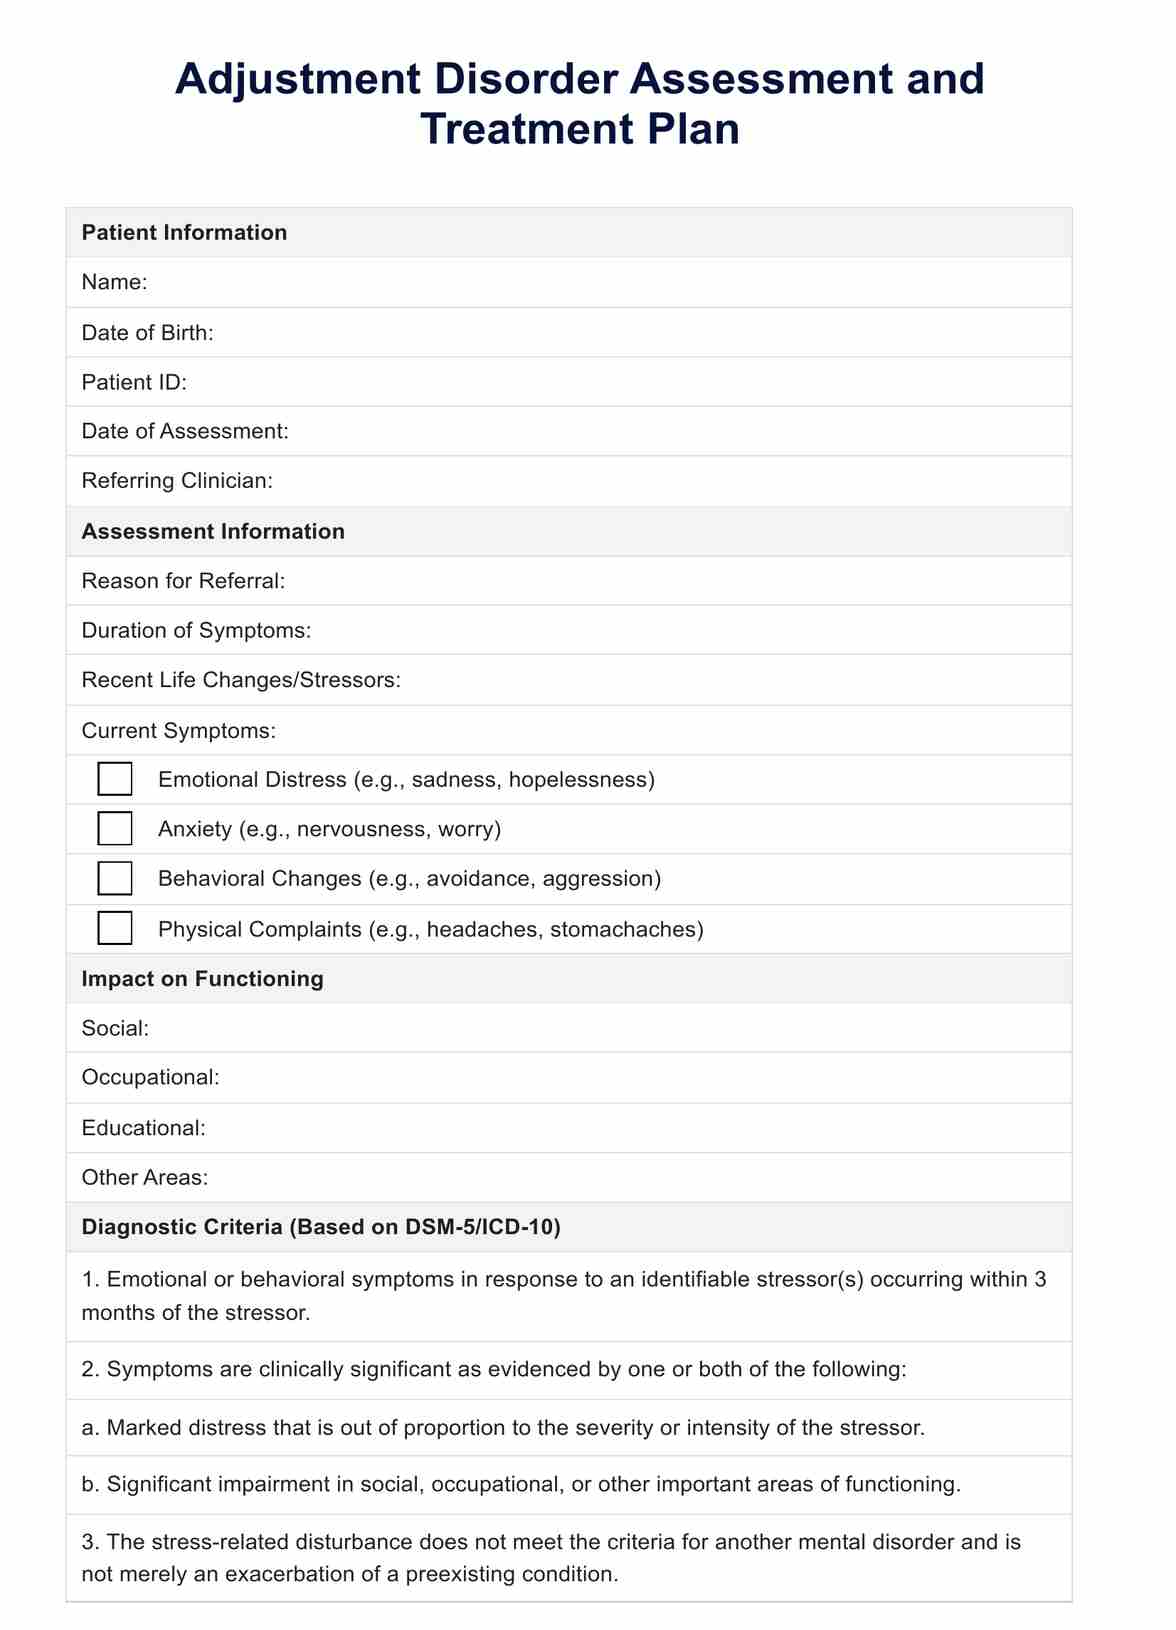 Adjustment Disorder PDF PDF Example